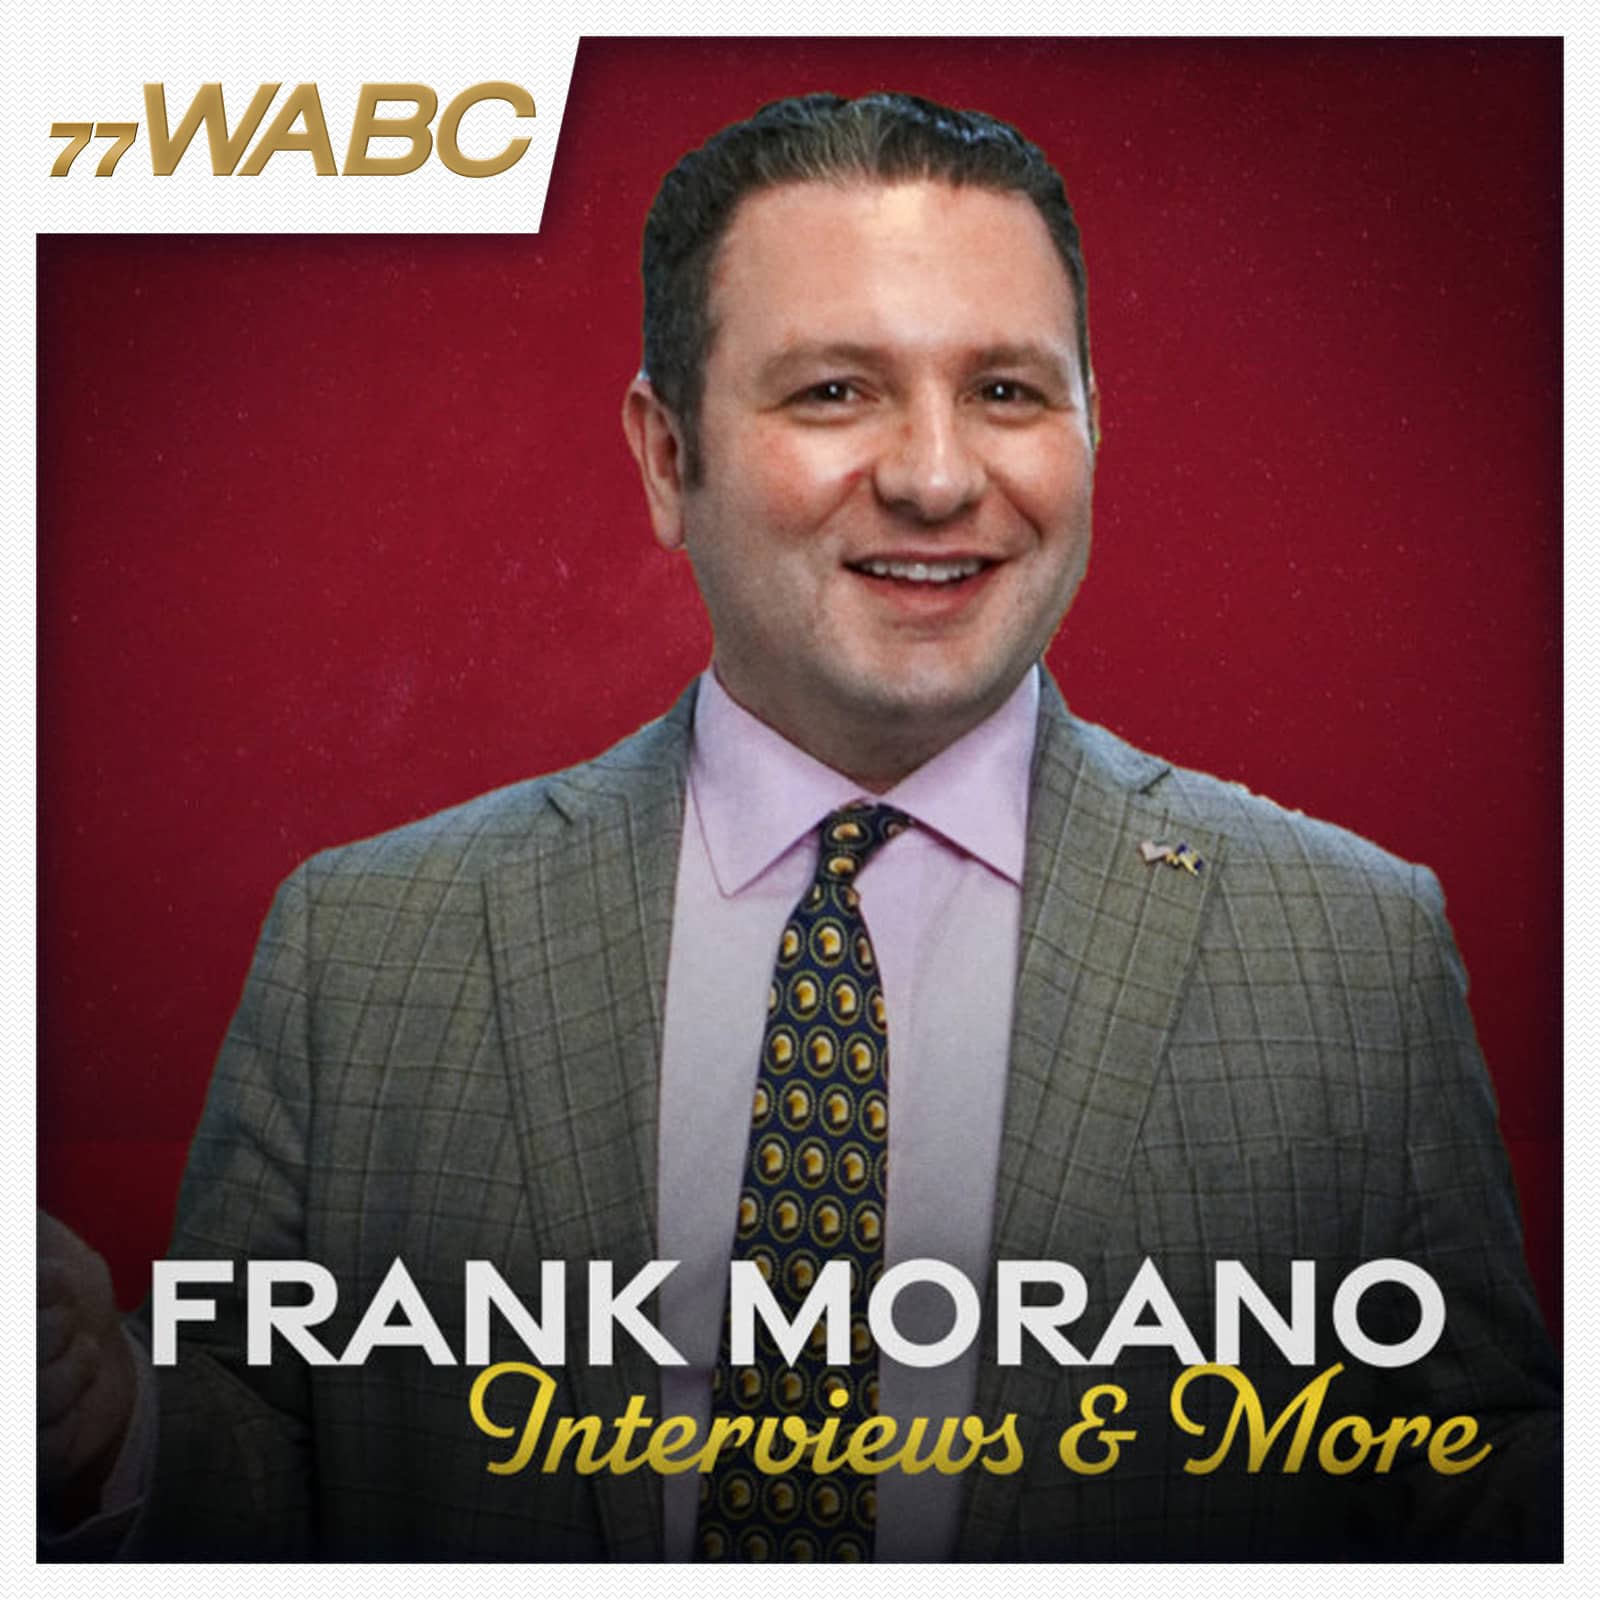 frank-morano-interviews-and-more-podcast-new-logo69727